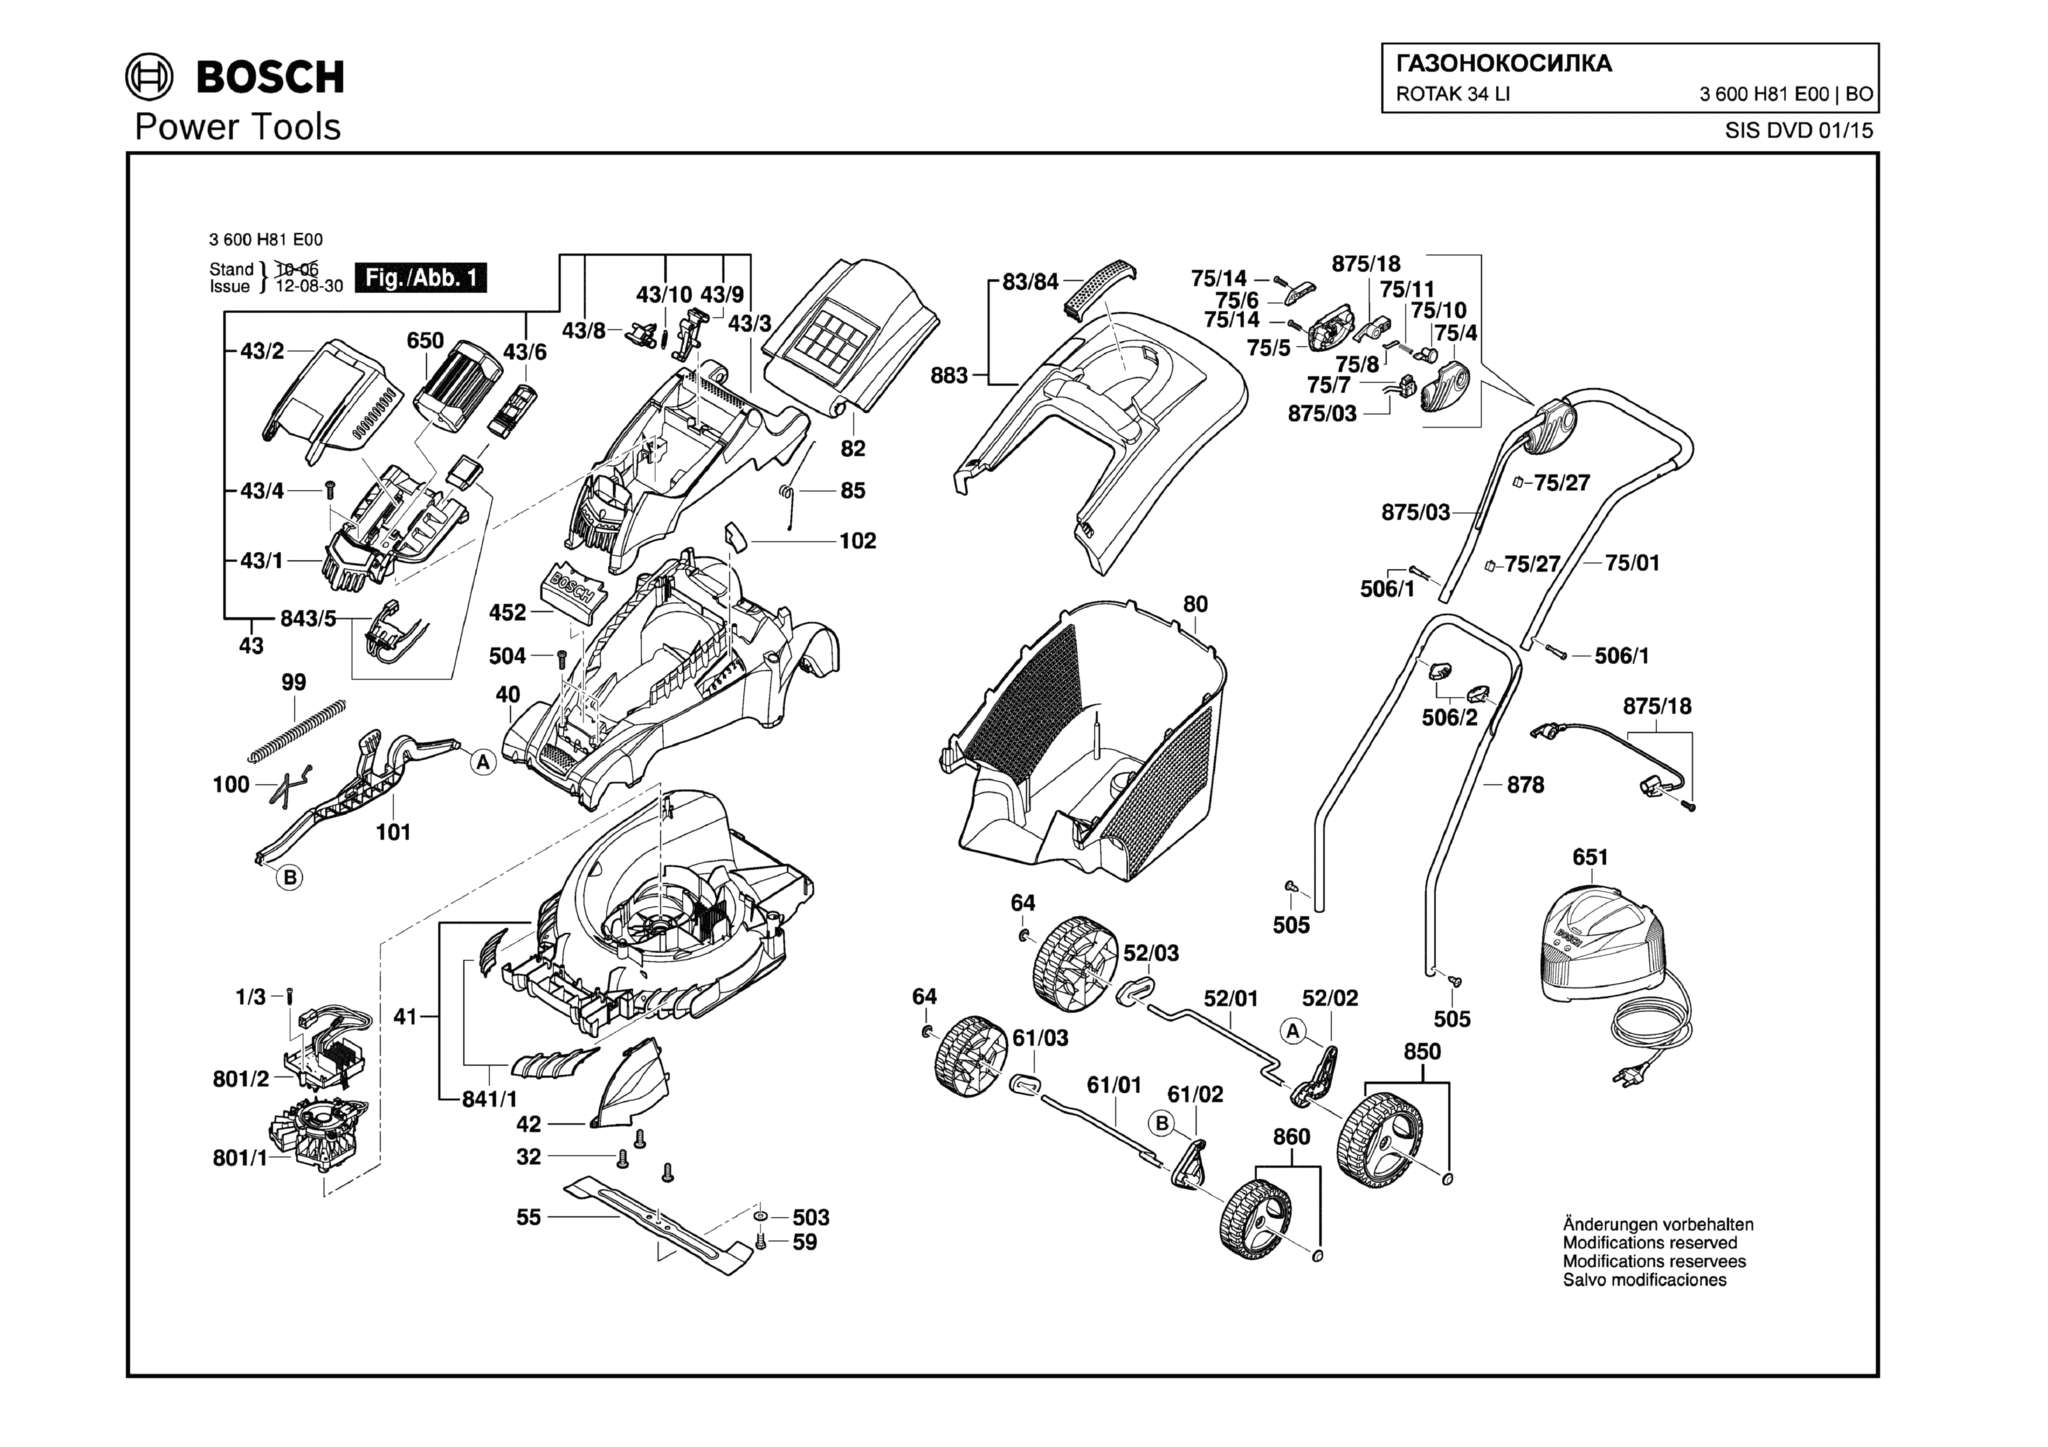 Запчасти, схема и деталировка Bosch ROTAK 34 LI (ТИП 3600H81E00)